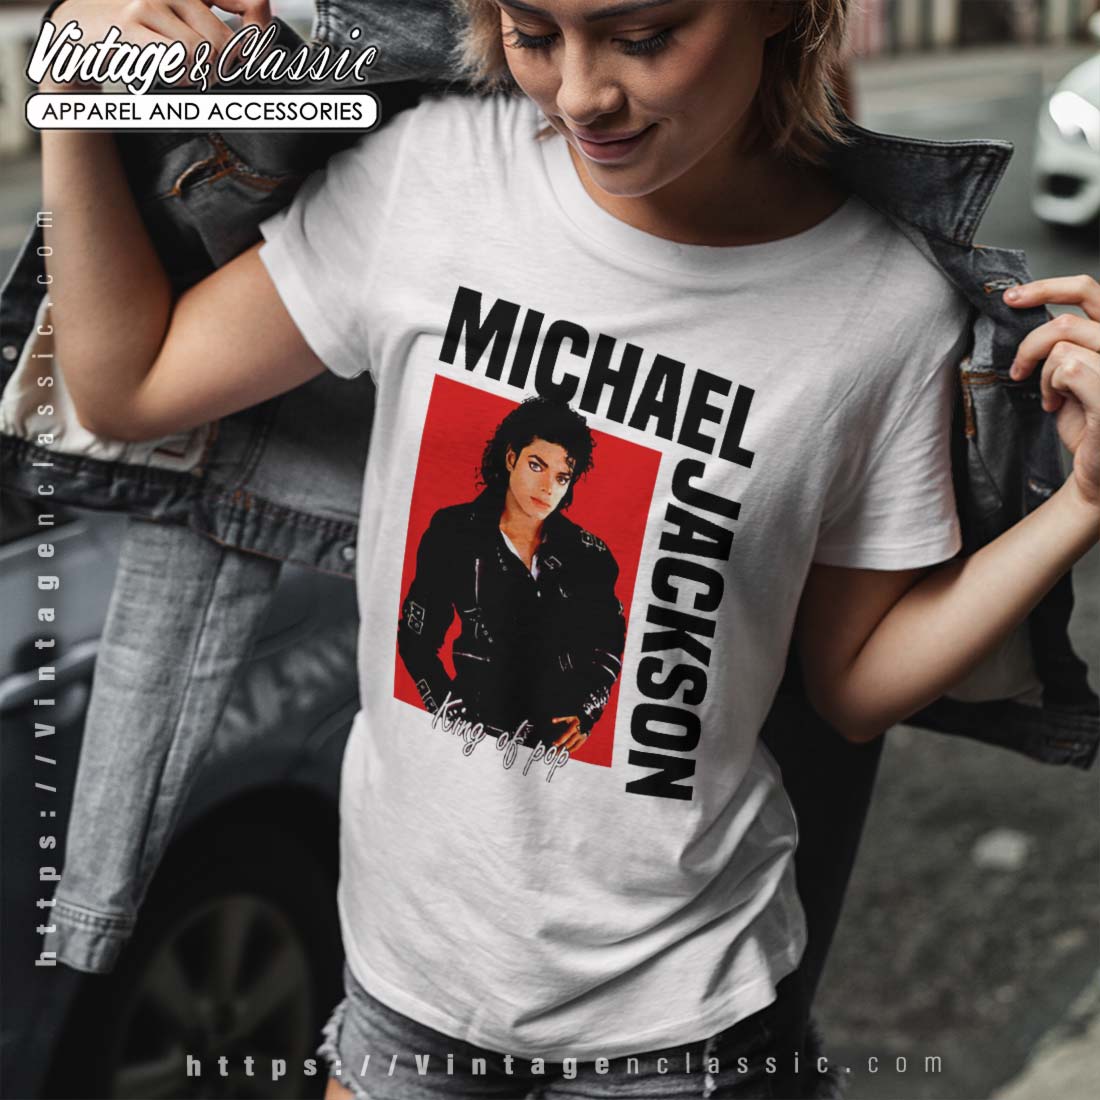 michael jackson t shirt vintage